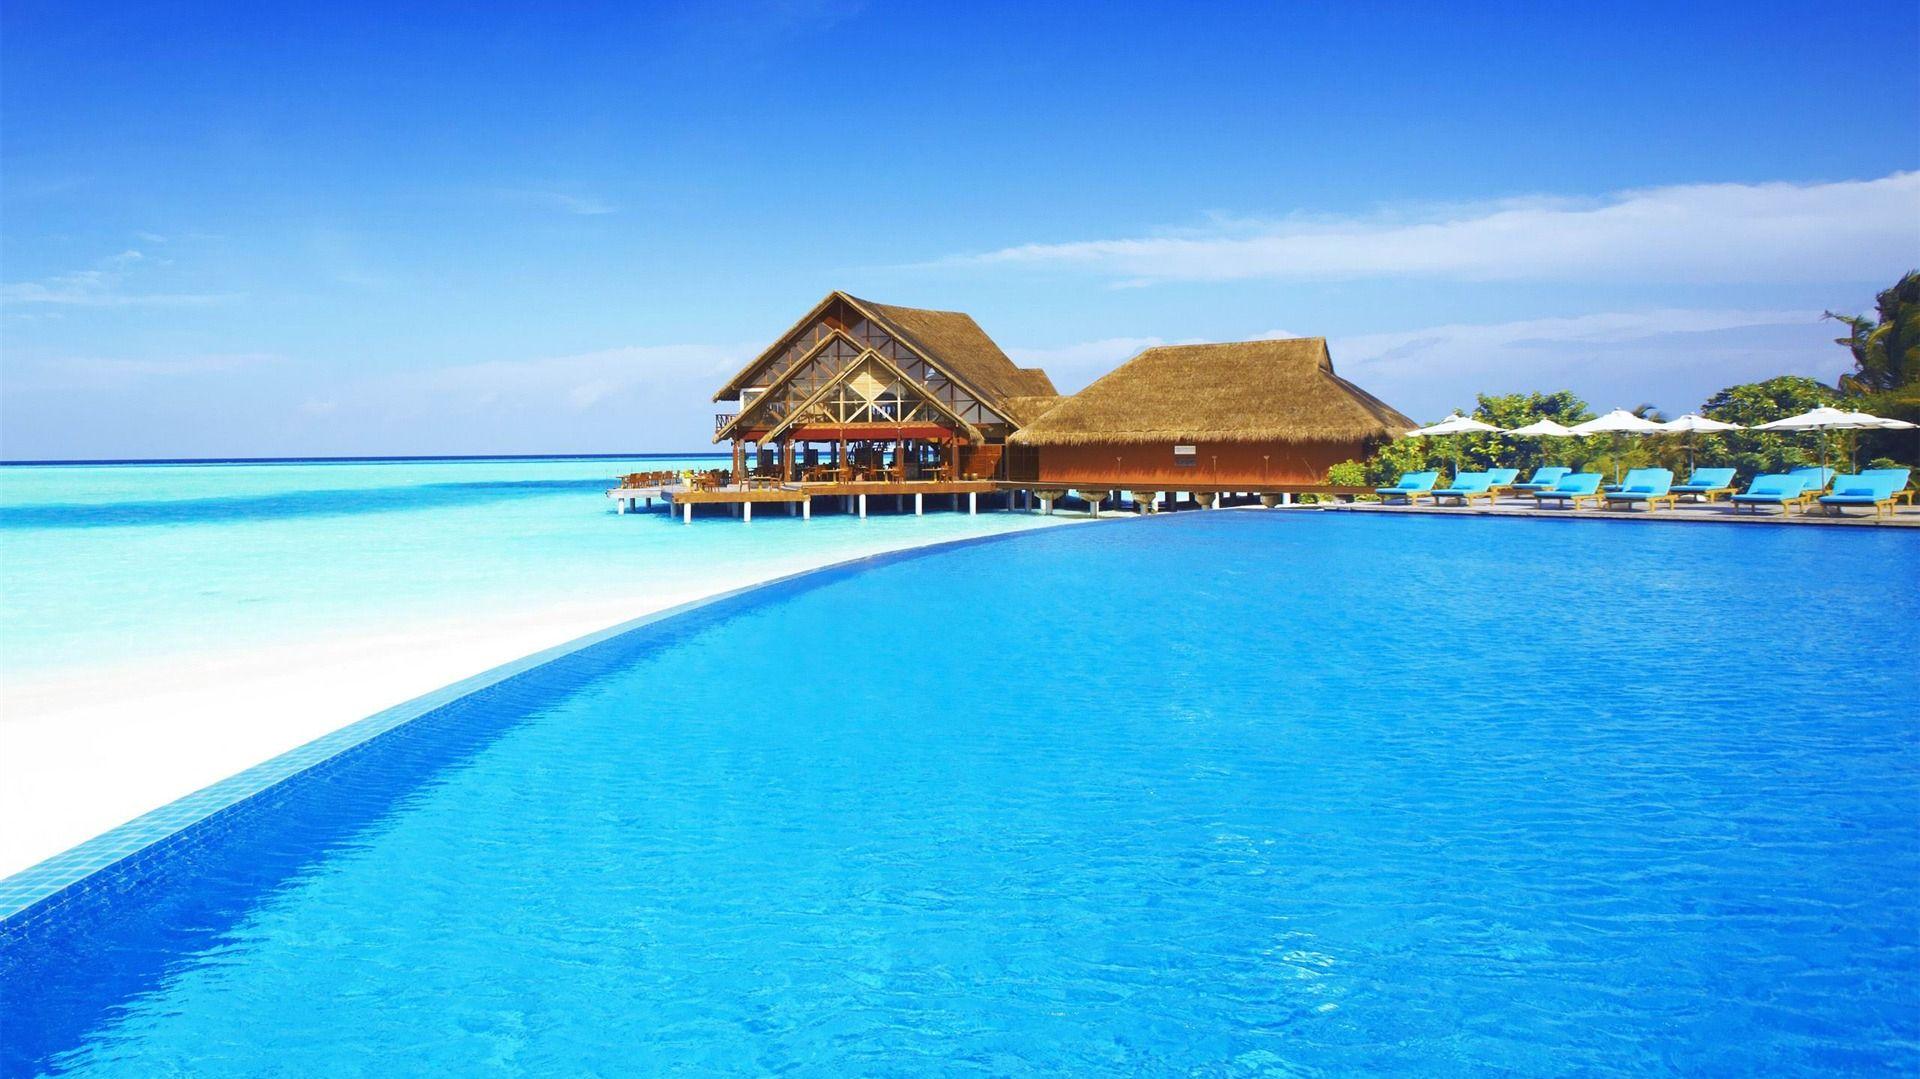 Maldives Islands Resort Wallpaper High Quality